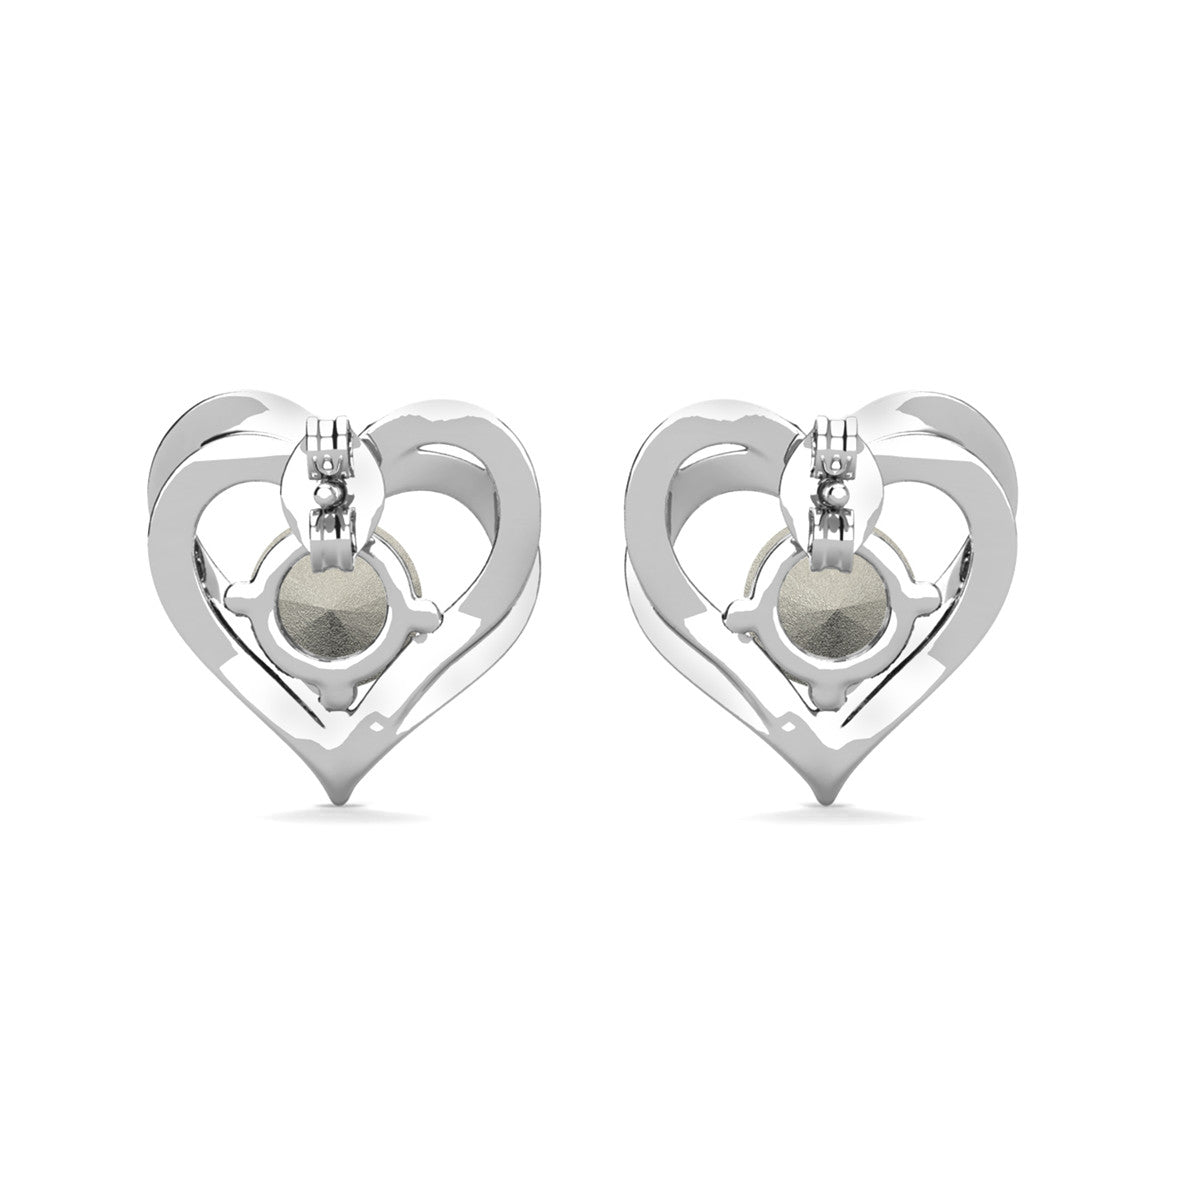 Forever February Birthstone Amethyst Earrings, 18k White Gold Plated Silver Double Heart Crystal Earrings